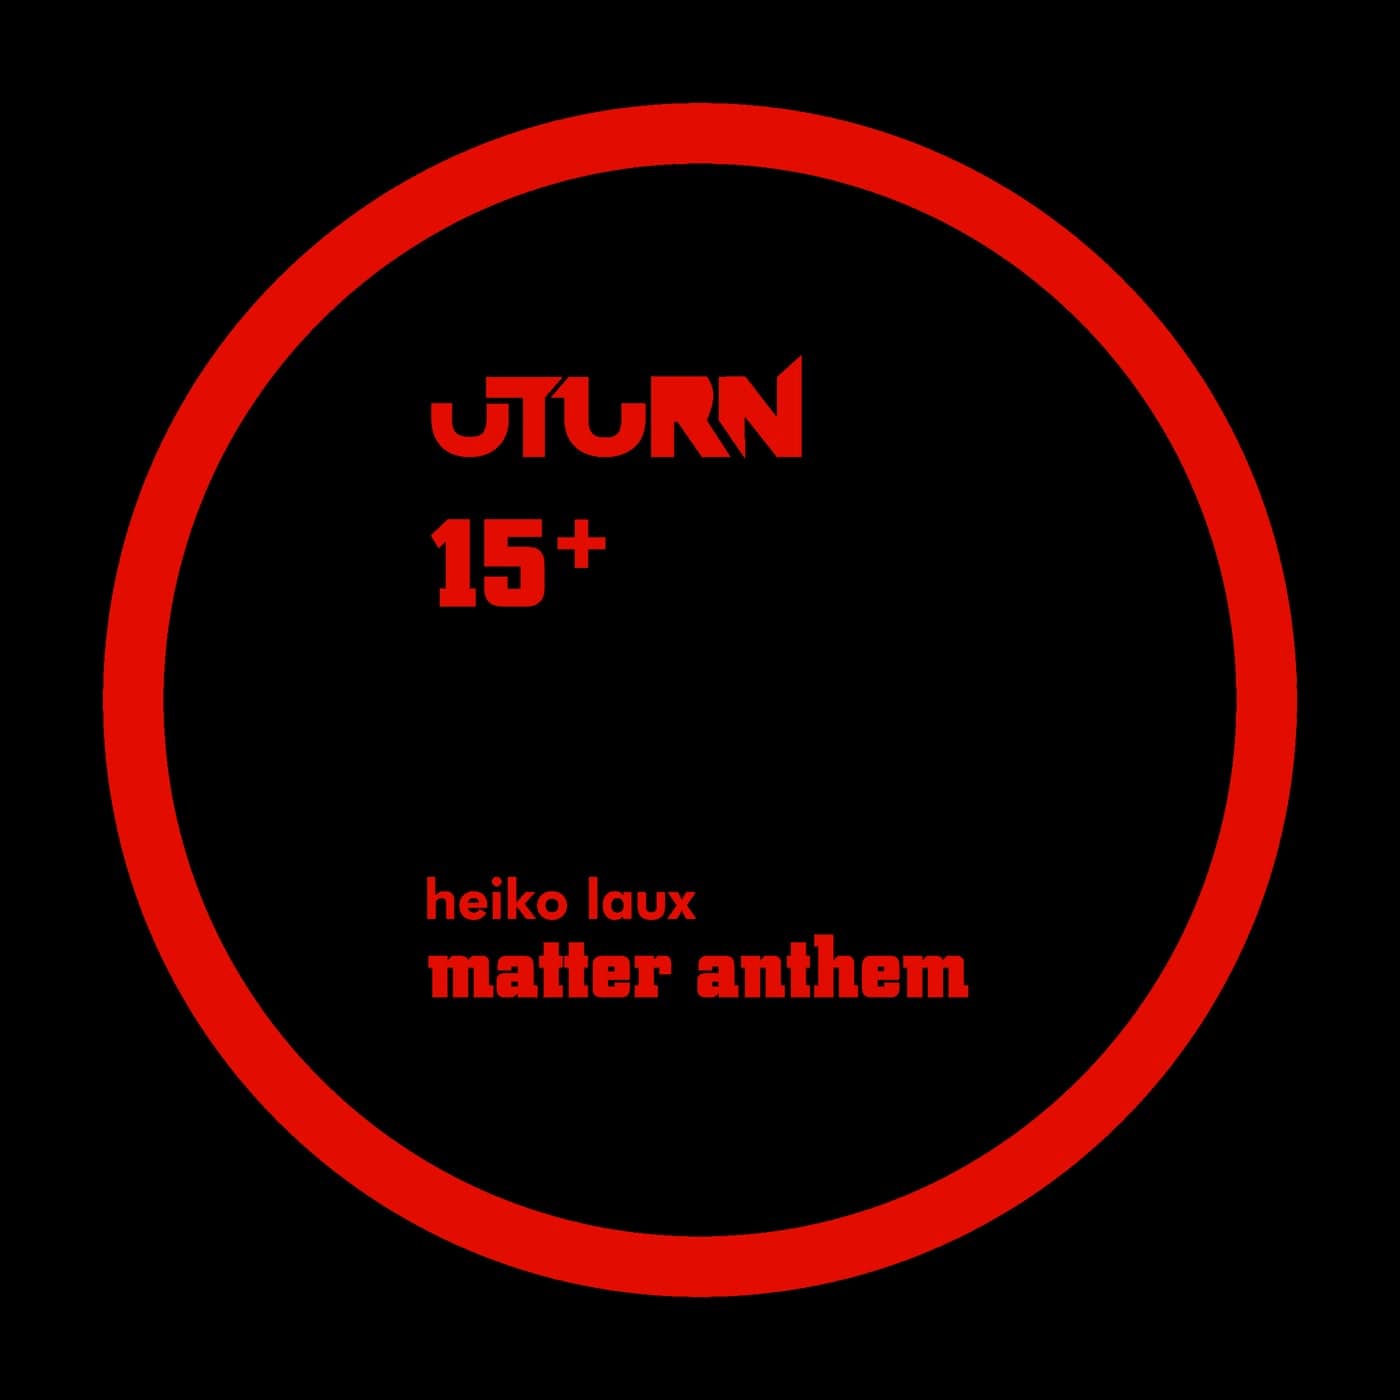 image cover: Heiko Laux - Matter Anthem / ut15plus